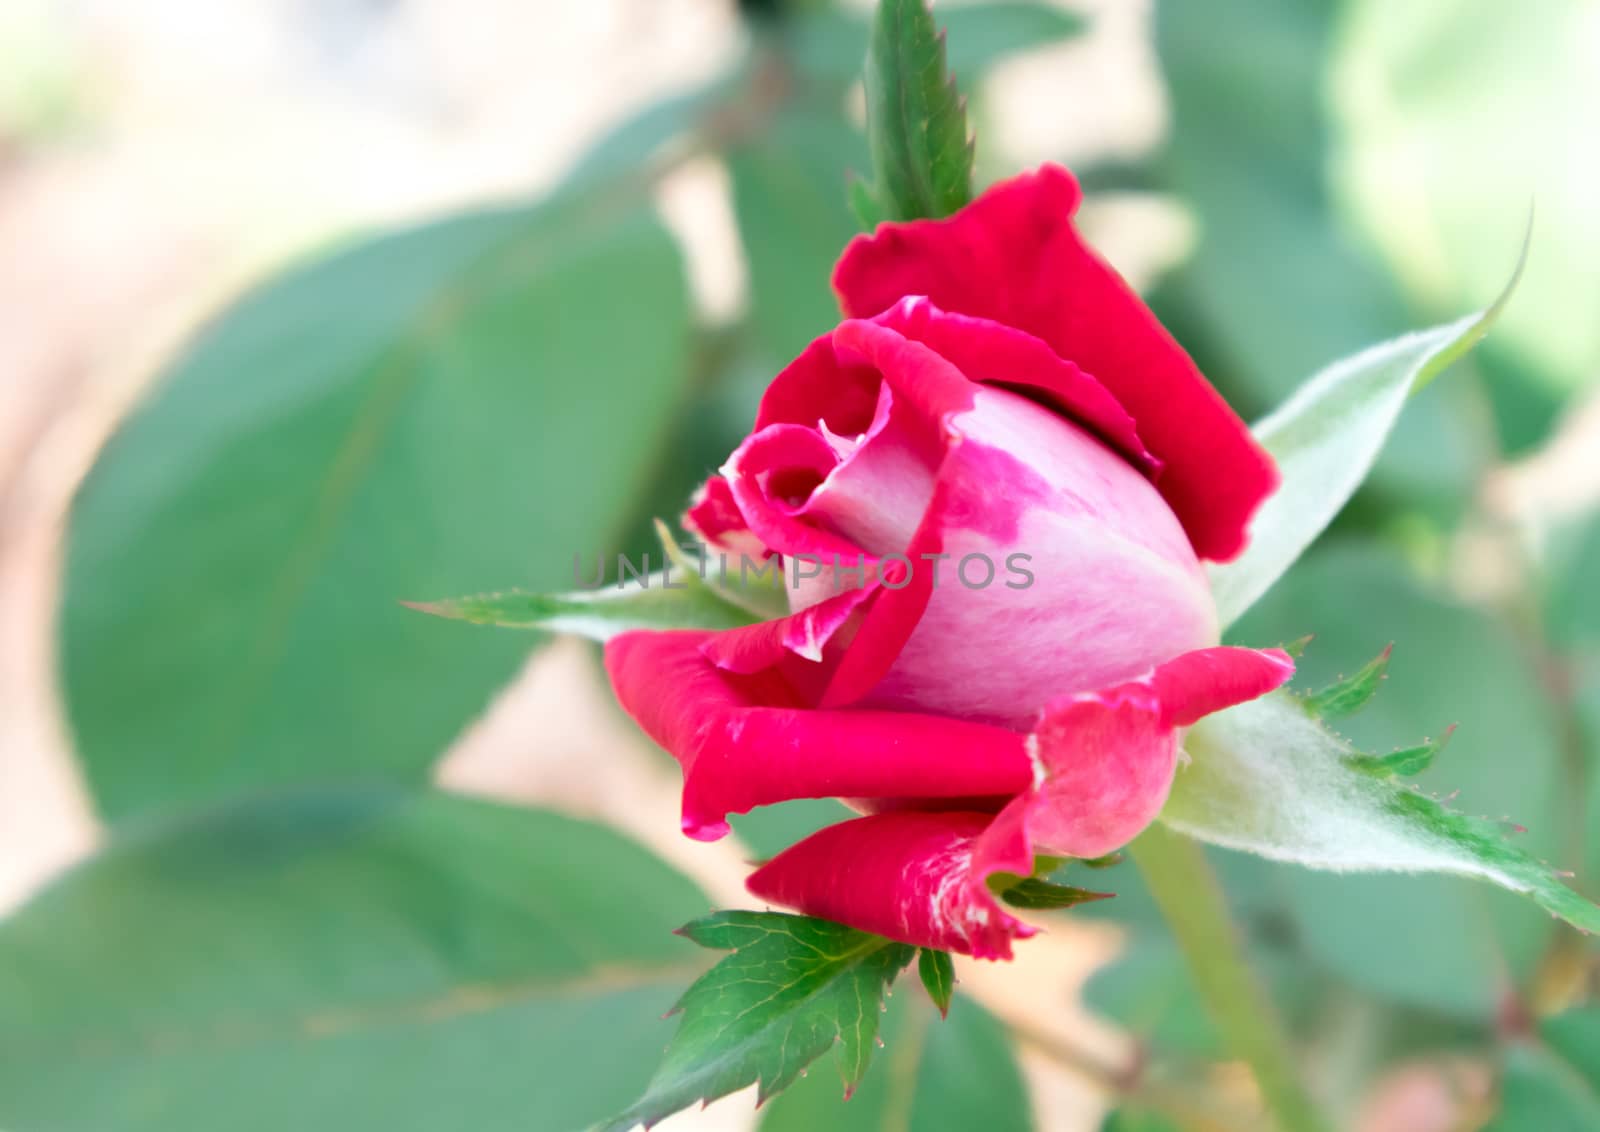 Closeup beautiful young red rose in garden, selective focus by pt.pongsak@gmail.com